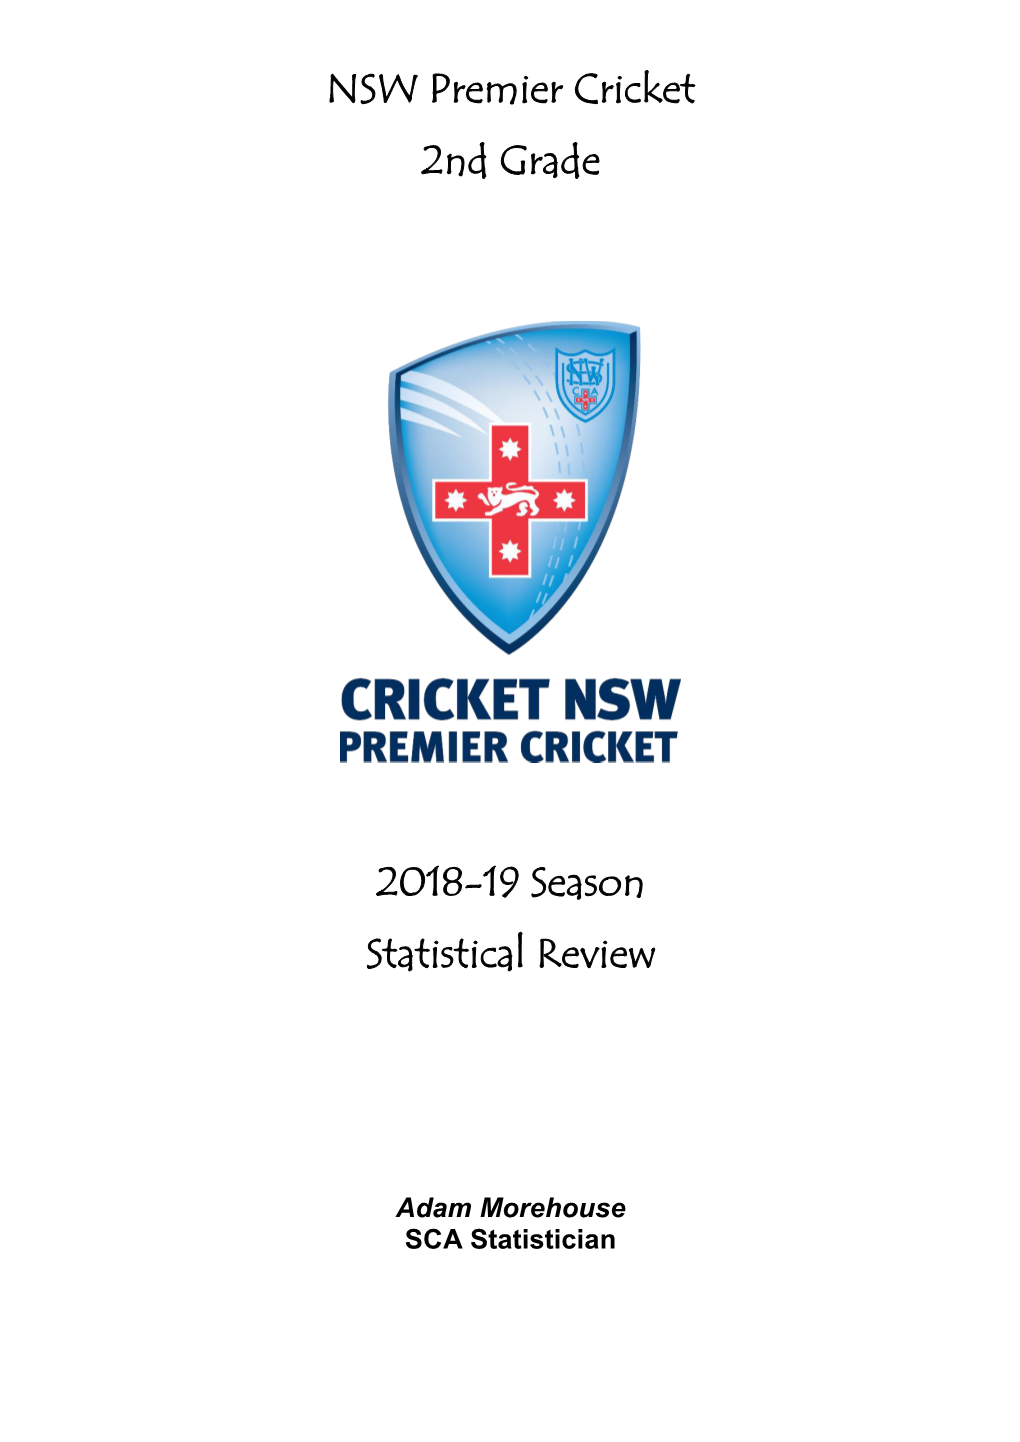 NSW Premier Cricket 2Nd Grade 2018-19 Season Statistical Review